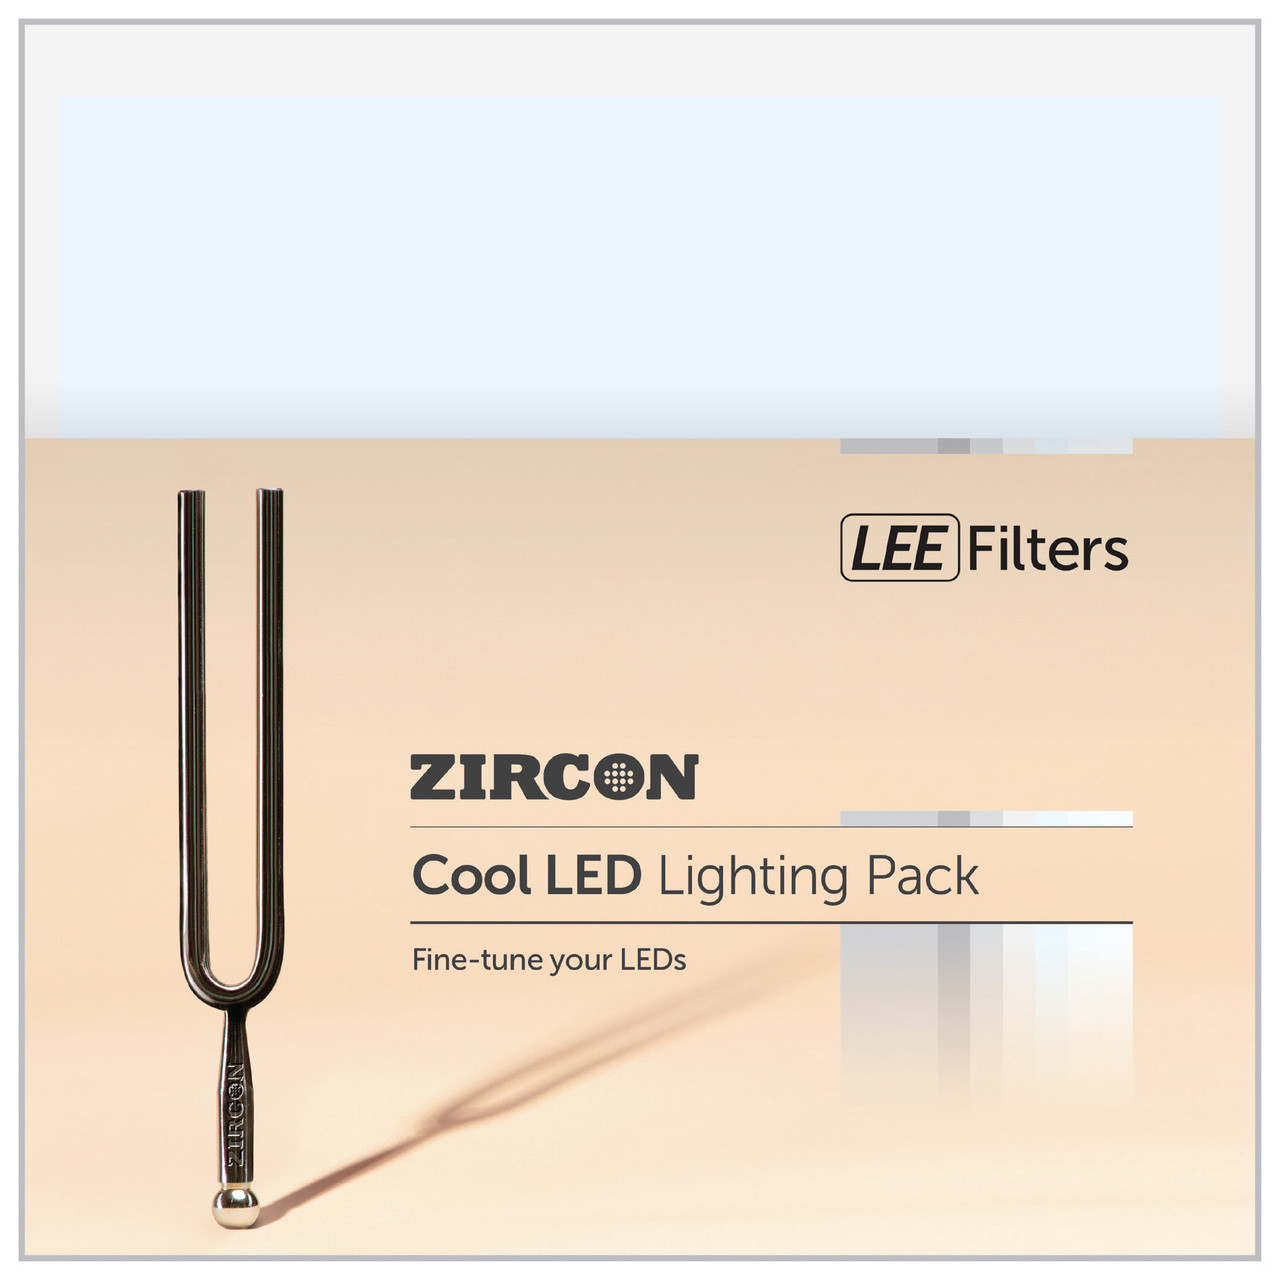 lee zircon cool led lighting pack